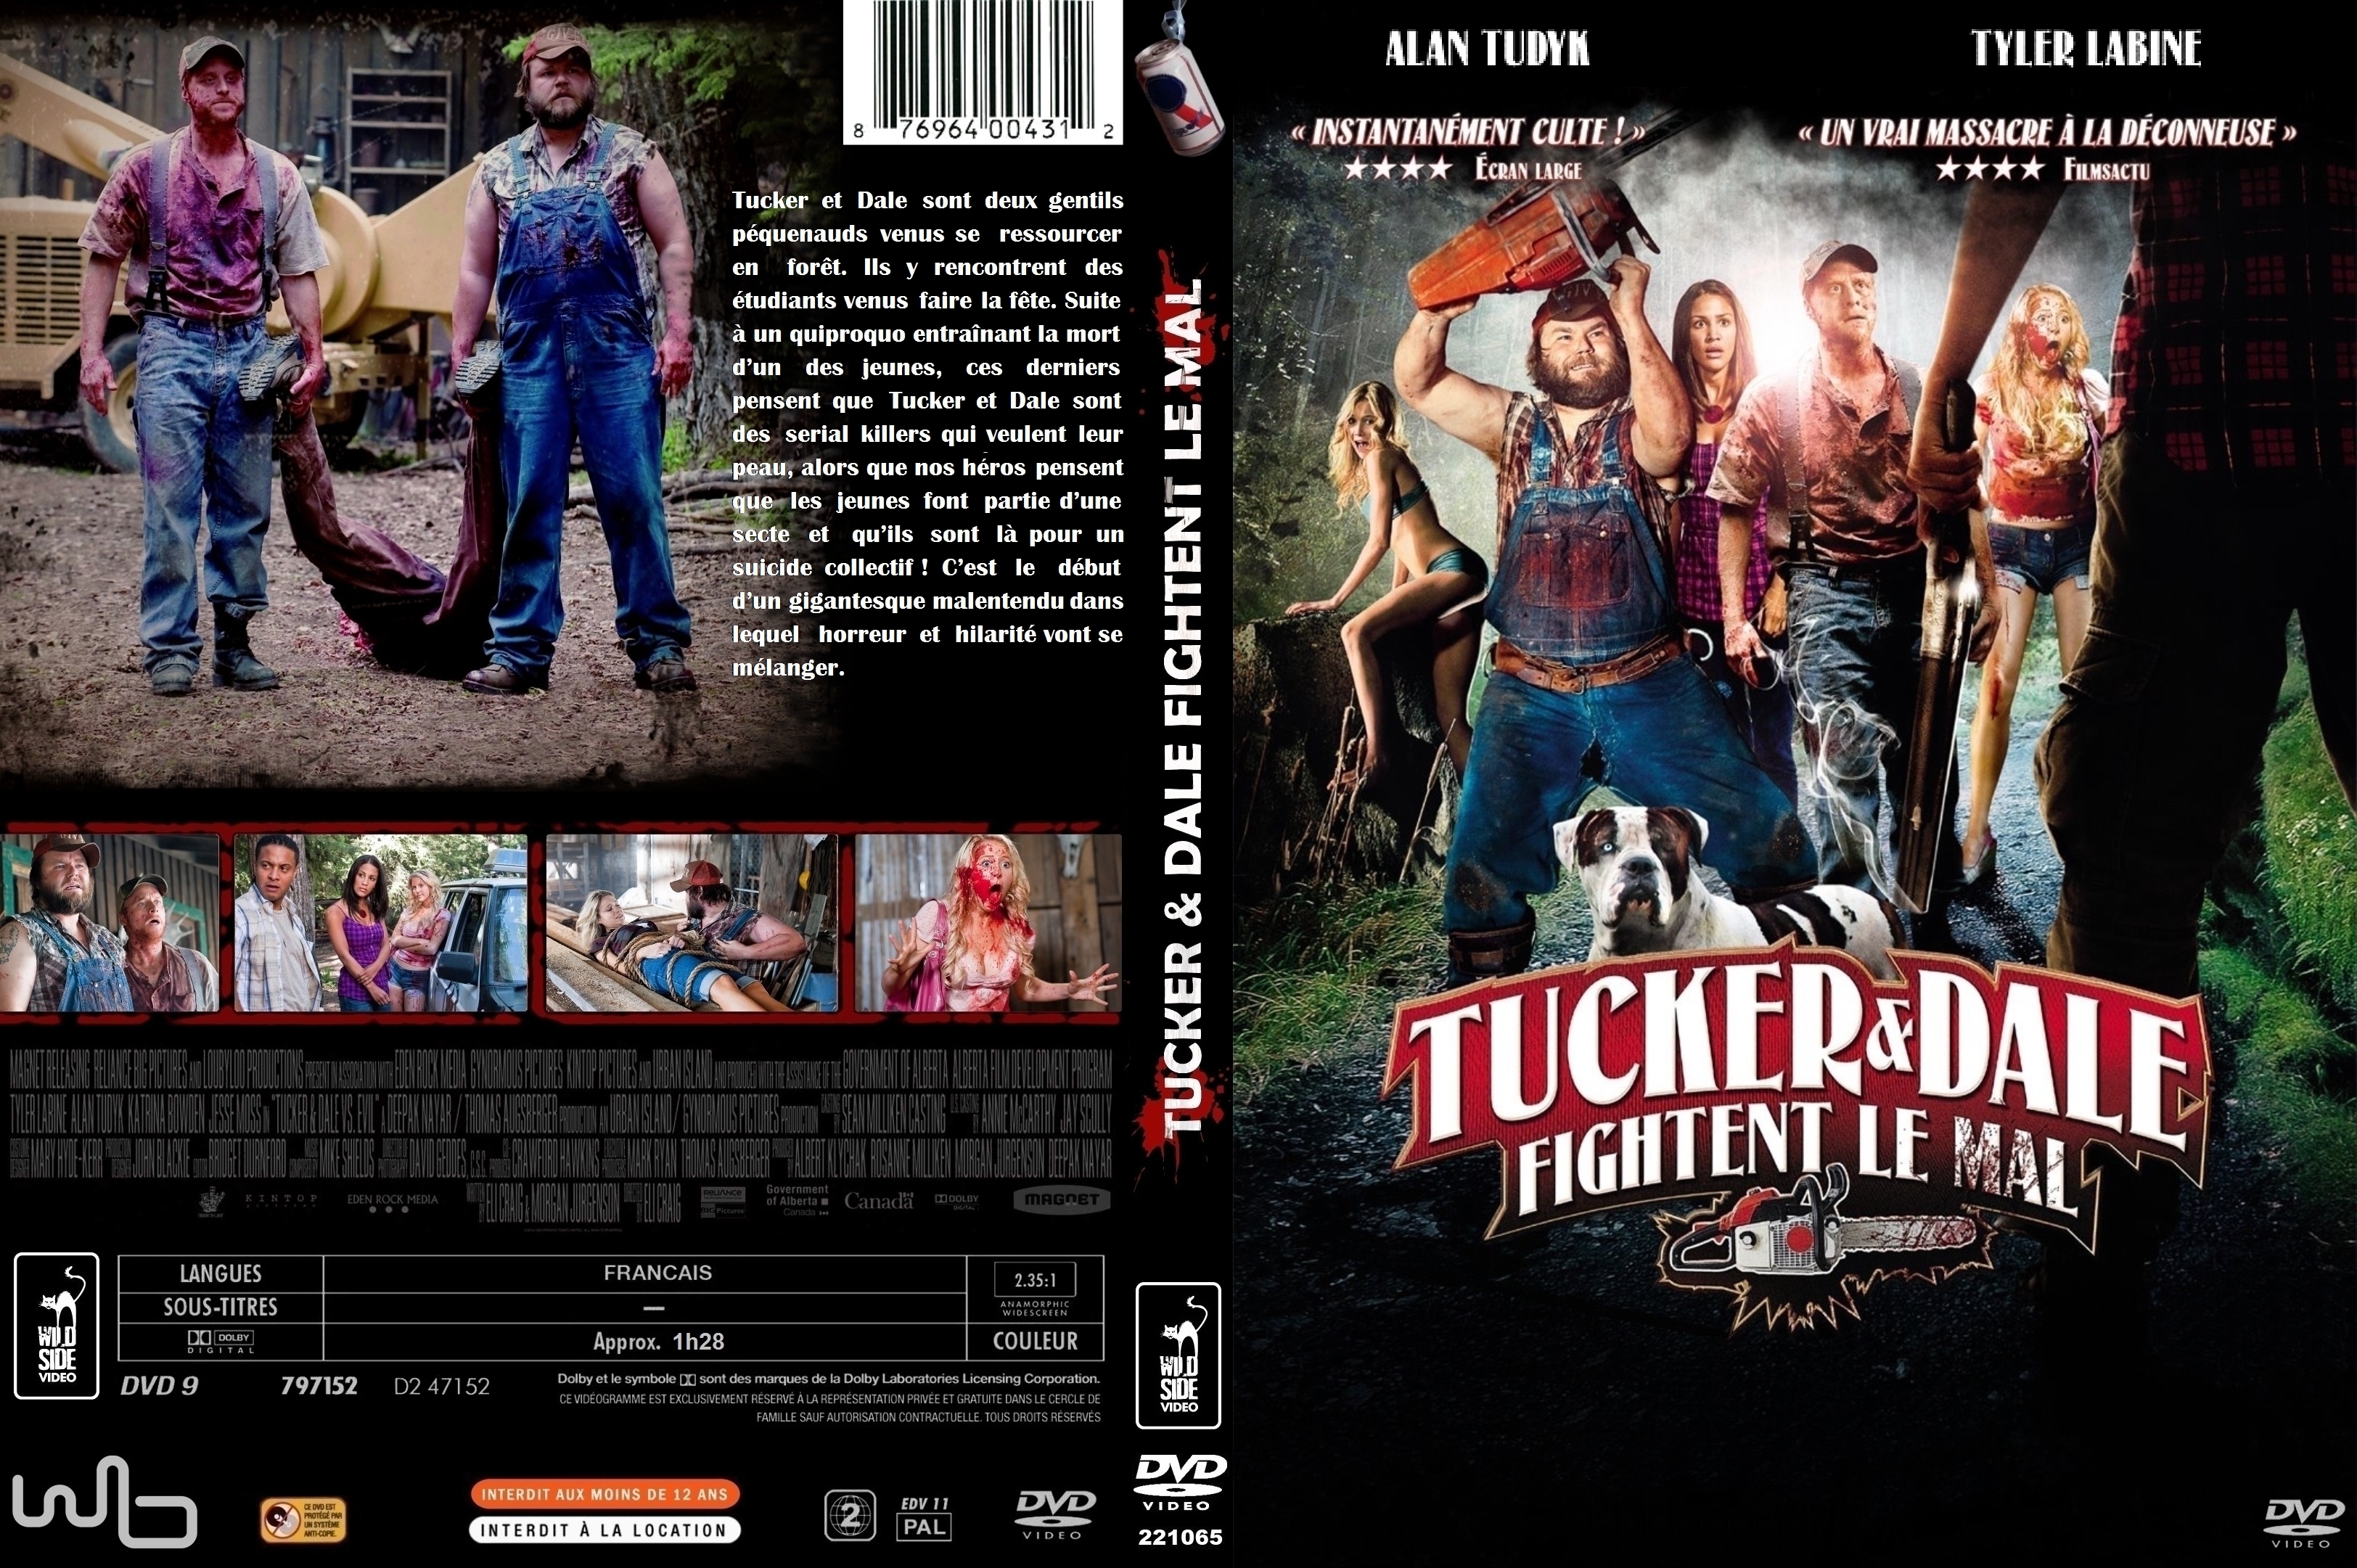 Jaquette DVD Tucker & Dale fightent le mal custom